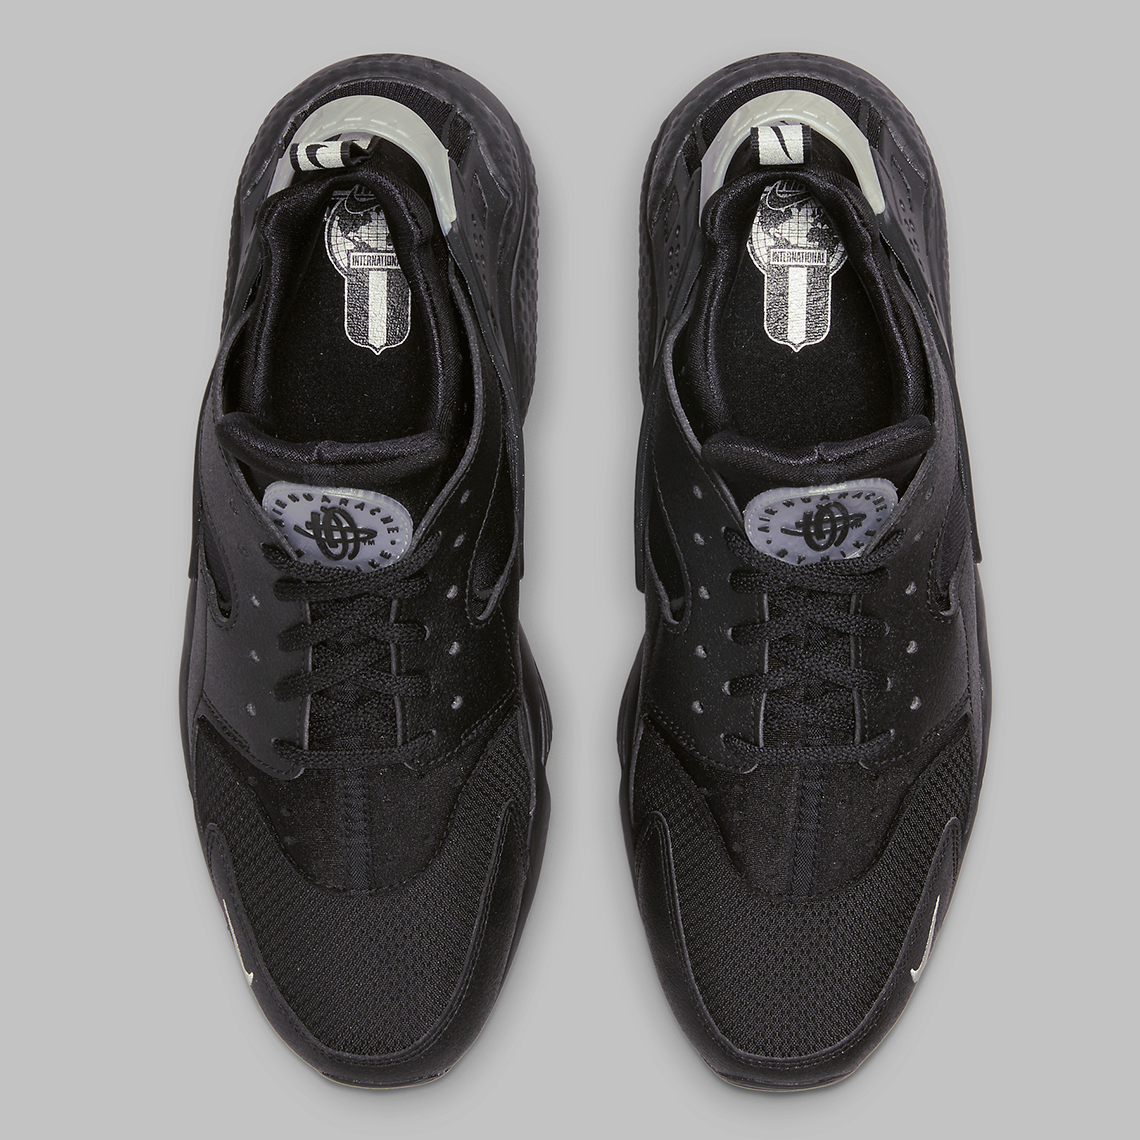 nike real flex navy blue women shoes size 12 wide Black Grey Dx8968 001 Release Date 4